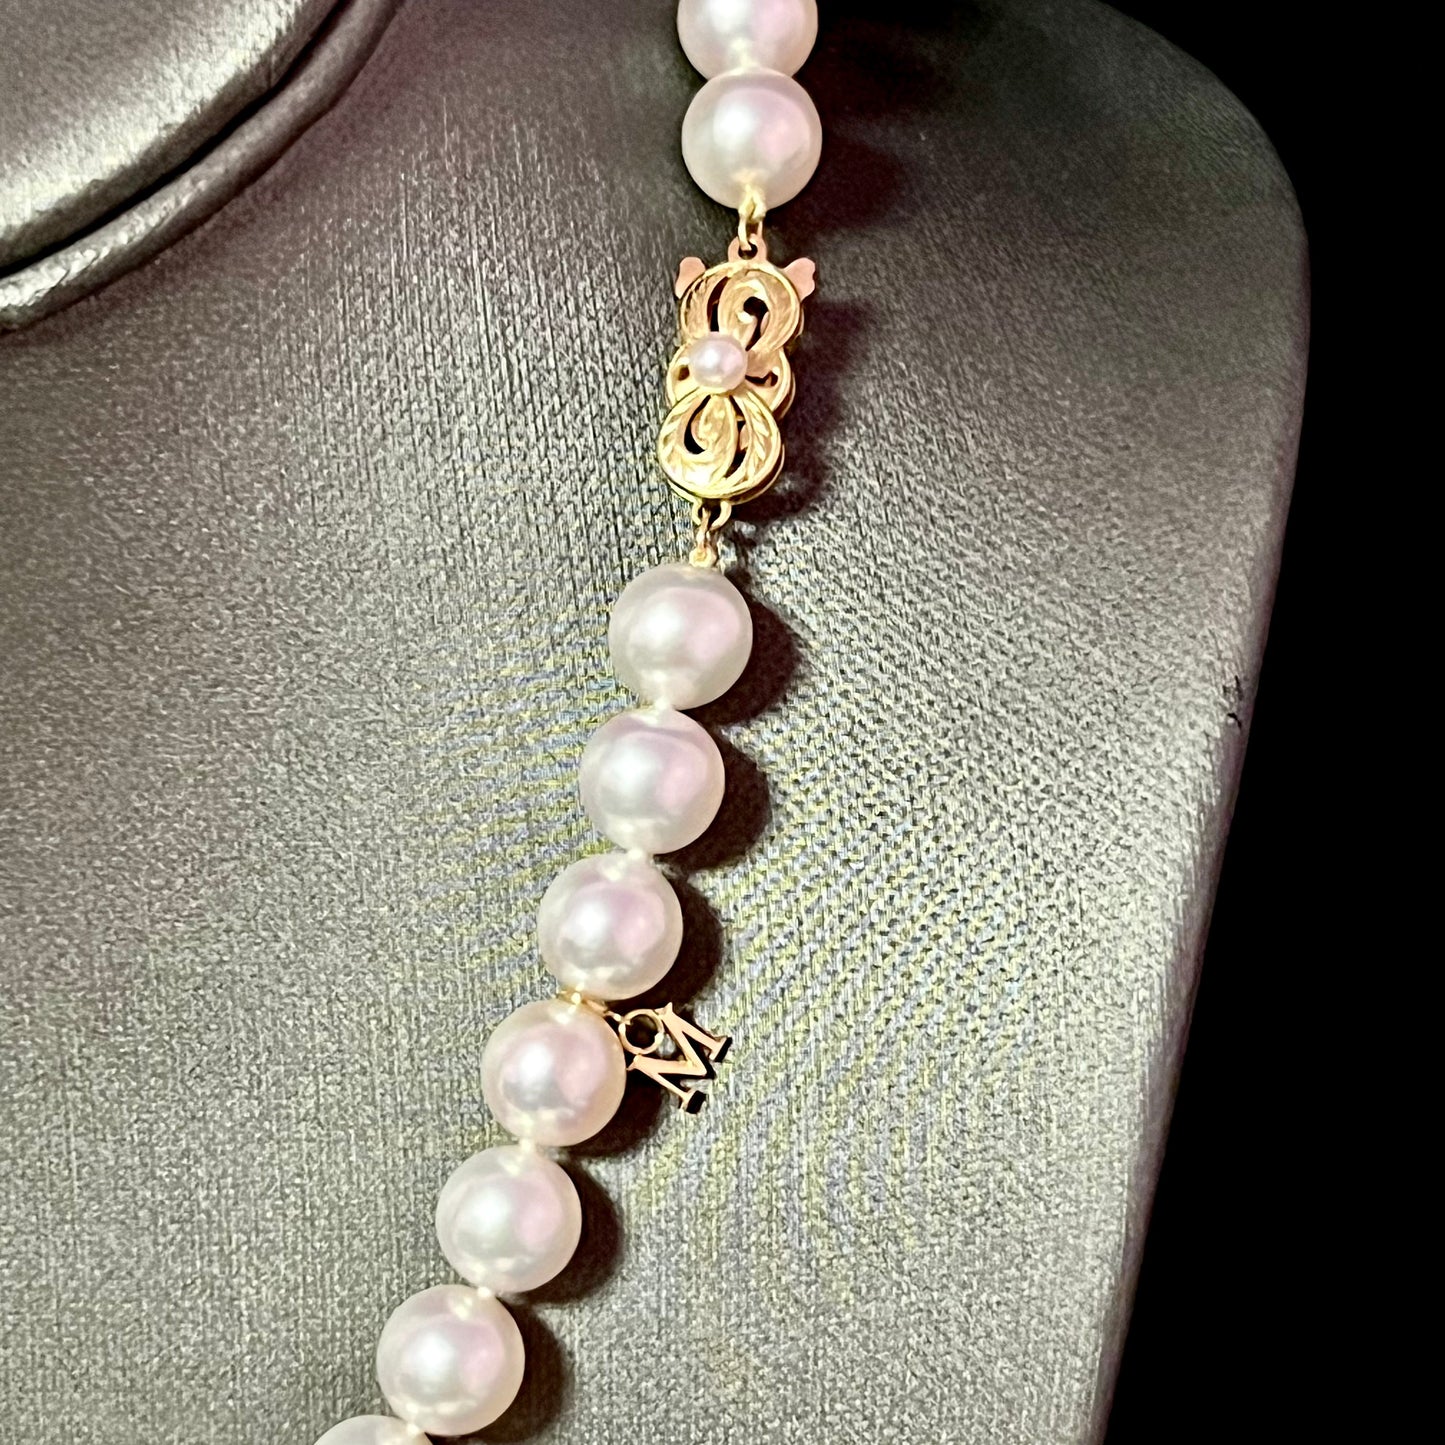 Mikimoto Estate Akoya Pearl Necklace 17.5" 18k Y Gold 9.5 mm Certified $47,500 311590 - Certified Fine Jewelry